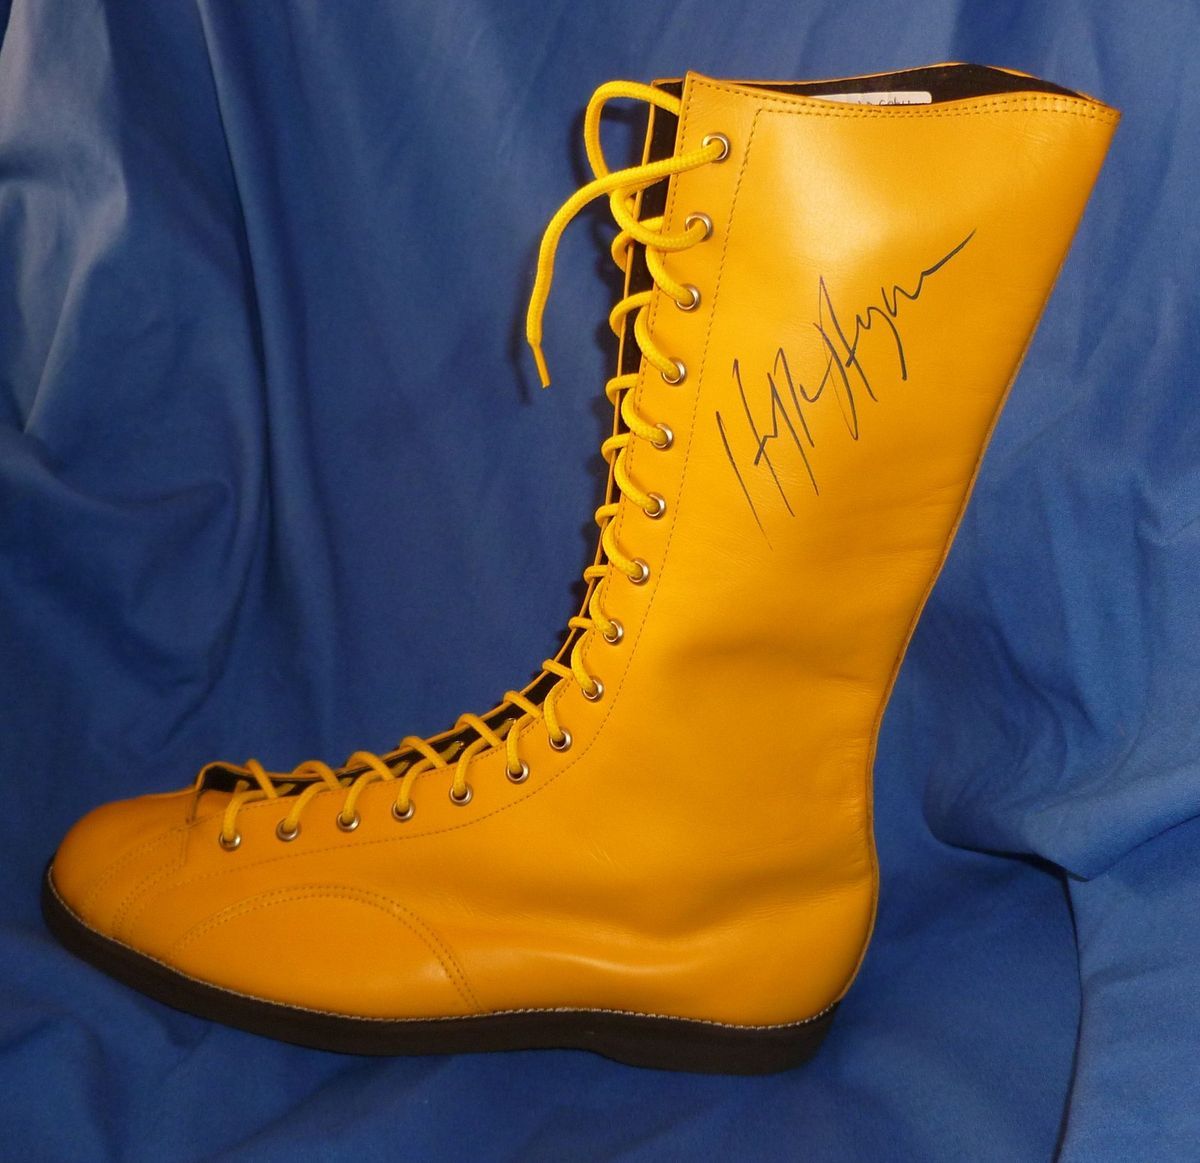 Hulk Hogan Signed Yellow Leather Wrestling Boot PSA DNA